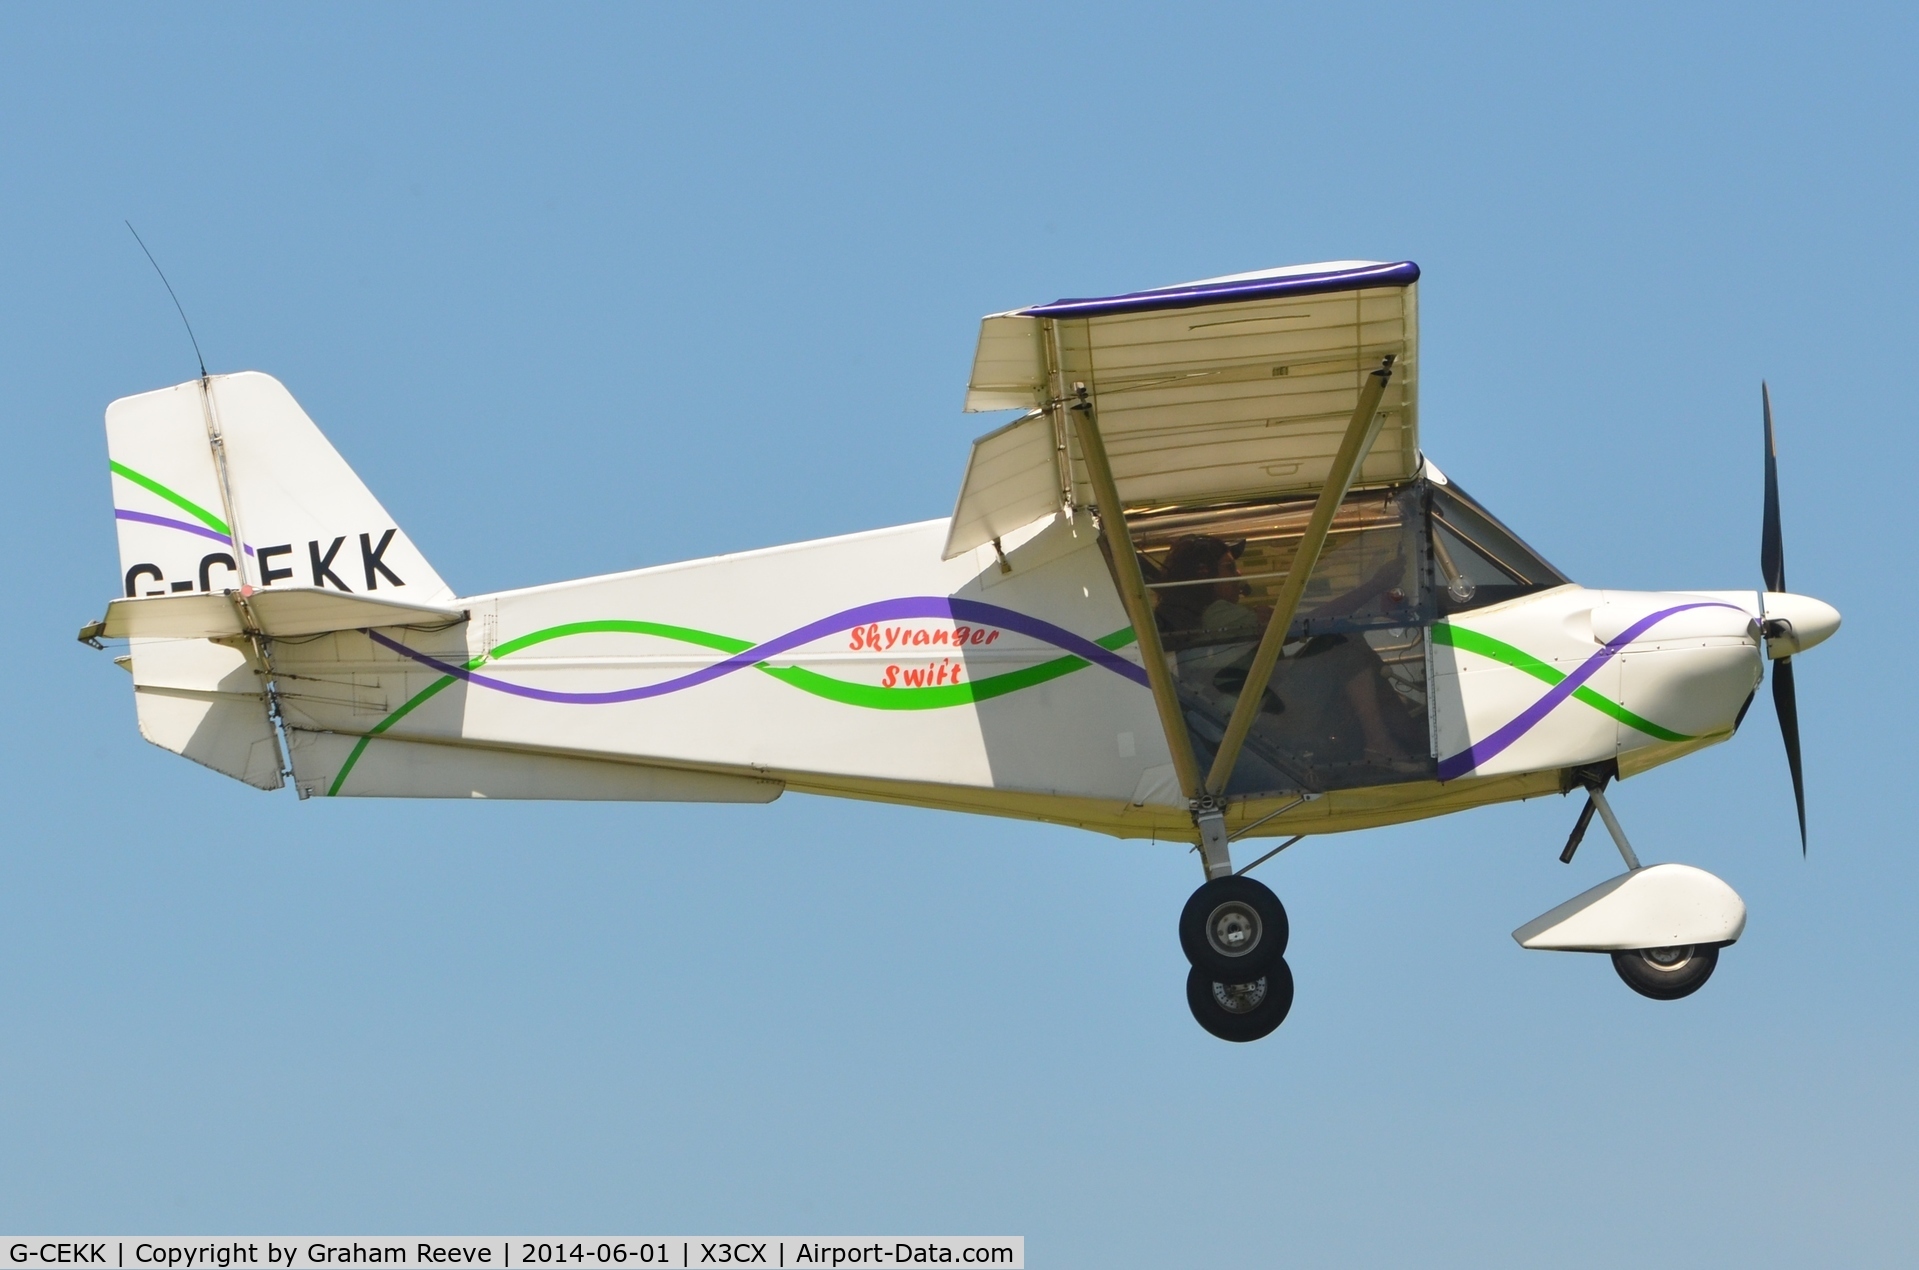 G-CEKK, 2007 Skyranger Swift 912S(1) C/N BMAA/HB/522, about to land at Northrepps.